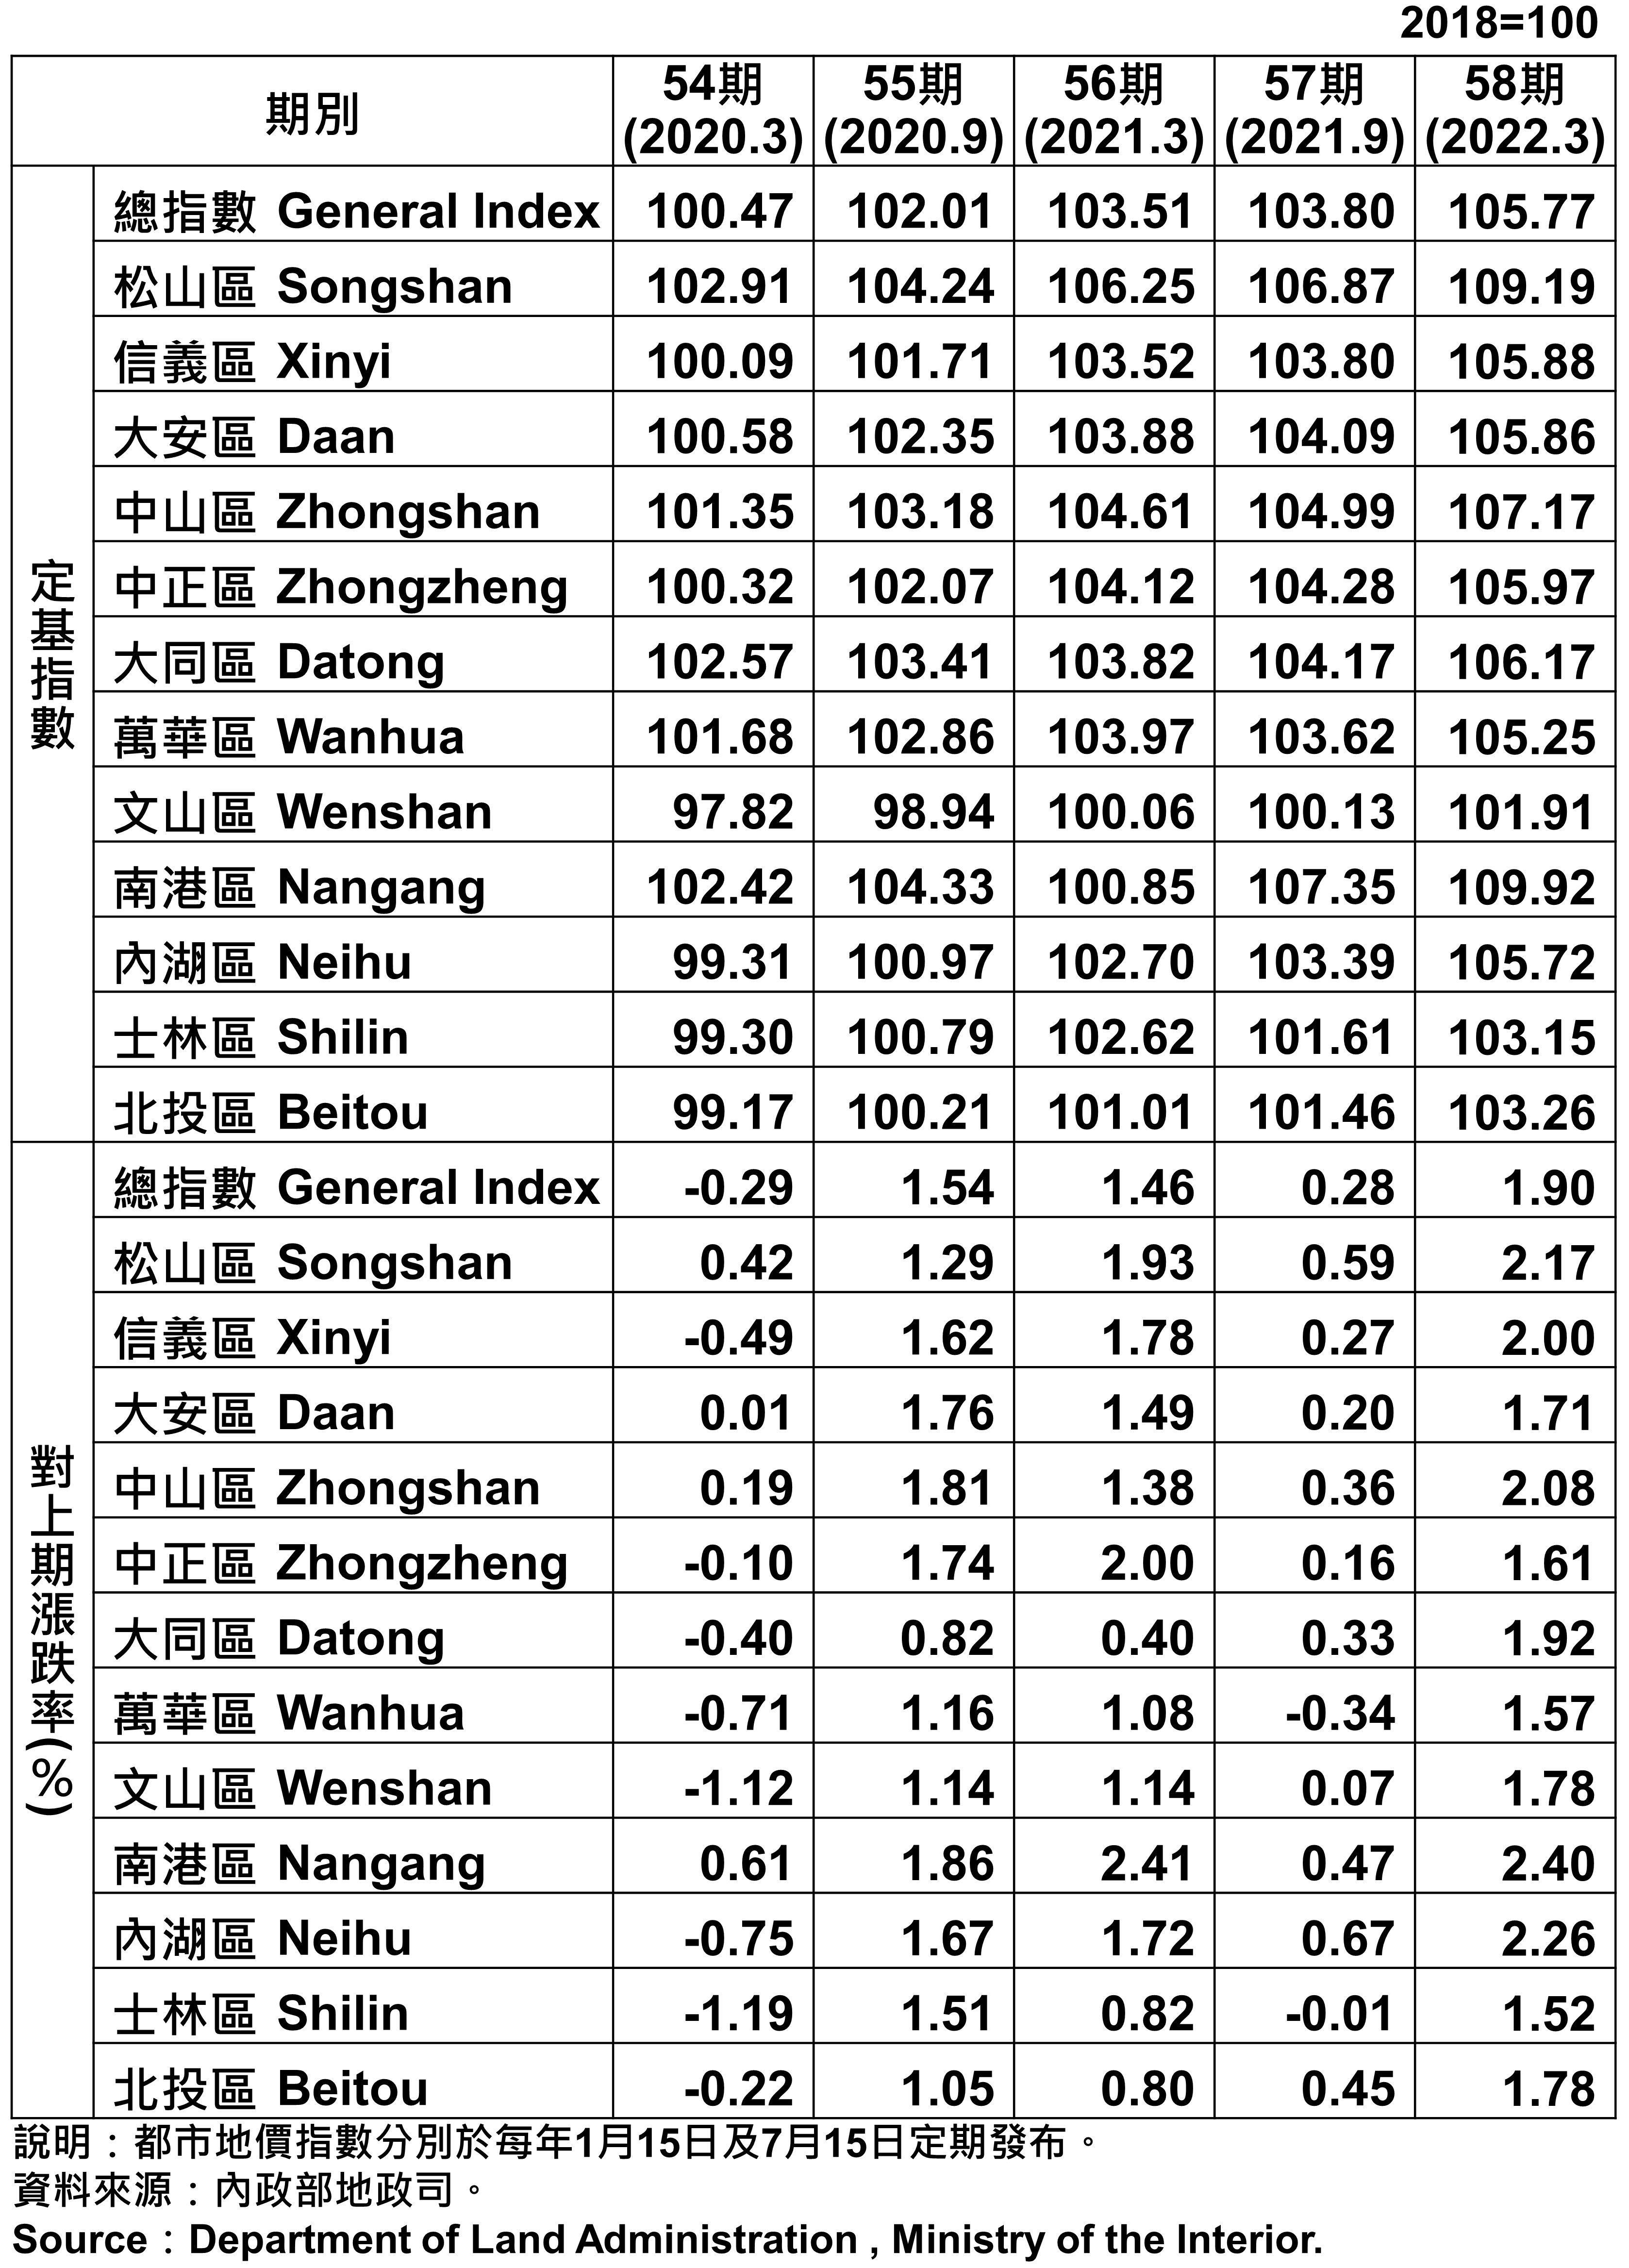 臺北市都市地價指數分區表—58期 Taipei's Urban Land Price Indexes by Districts—58th